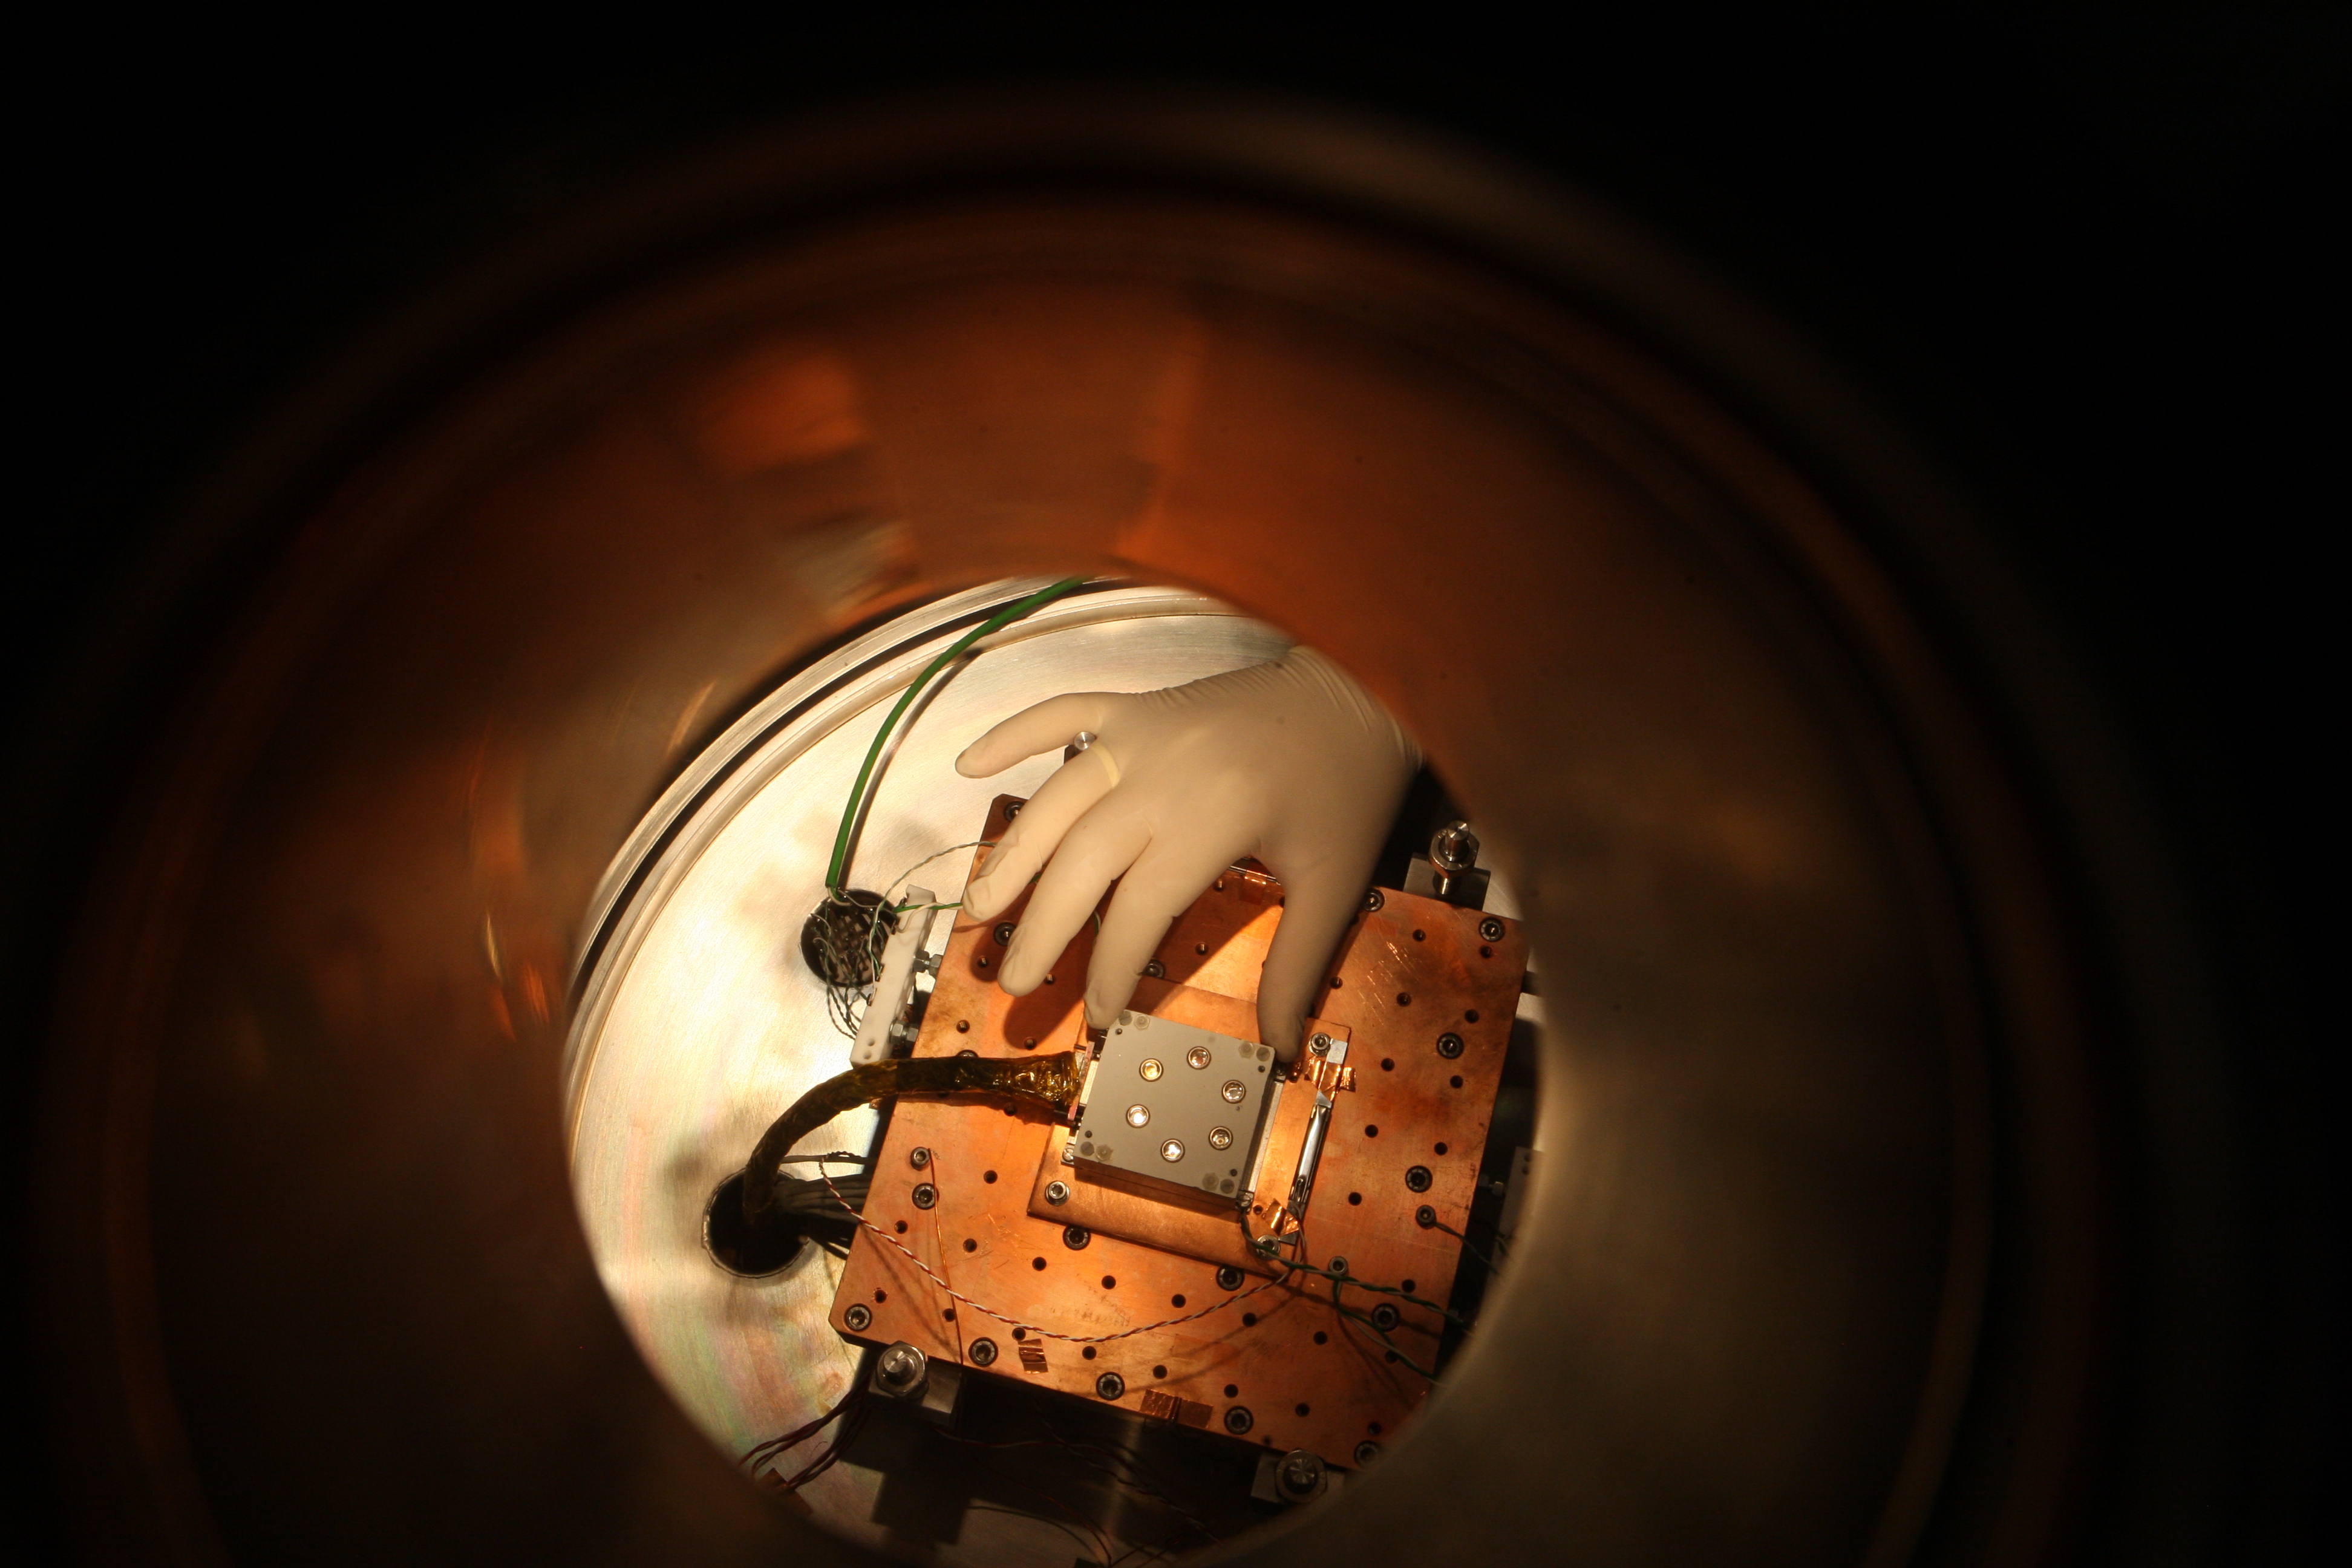 Engineering model tests of the UV Sensor inside Mars Simulation Chambers